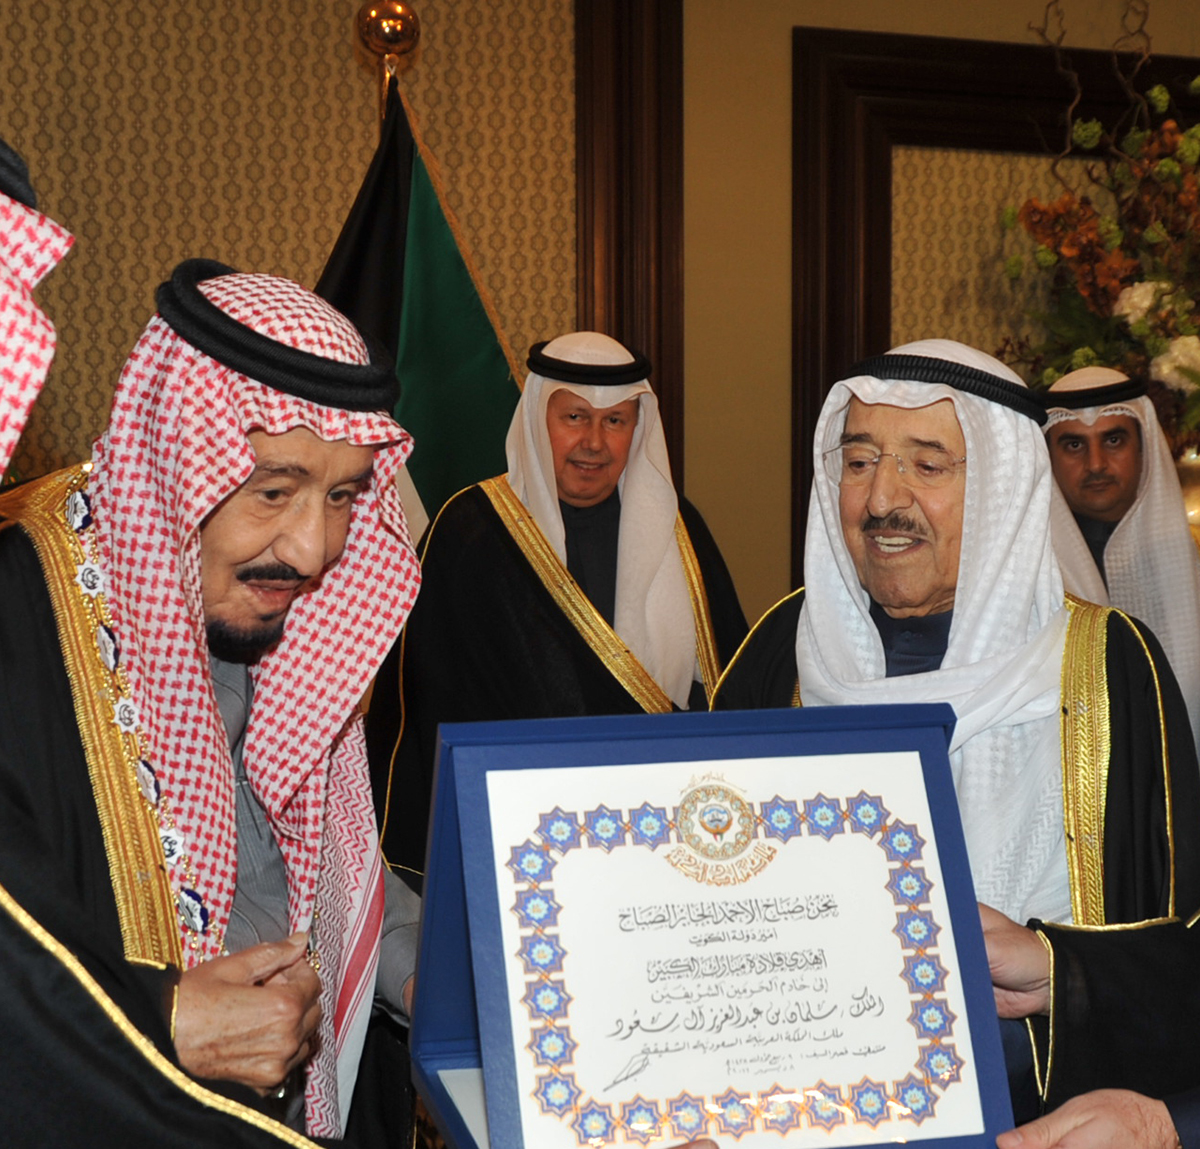 His Highness the Amir Sheikh Sabah Al-Ahmad Jaber Al-Sabah confers Saudi King Salman Nin Abdulaziz Al-Saud with the Order of Mubarak Al-Kabir and Order of Kuwait, the most prestigious Kuwaiti medals